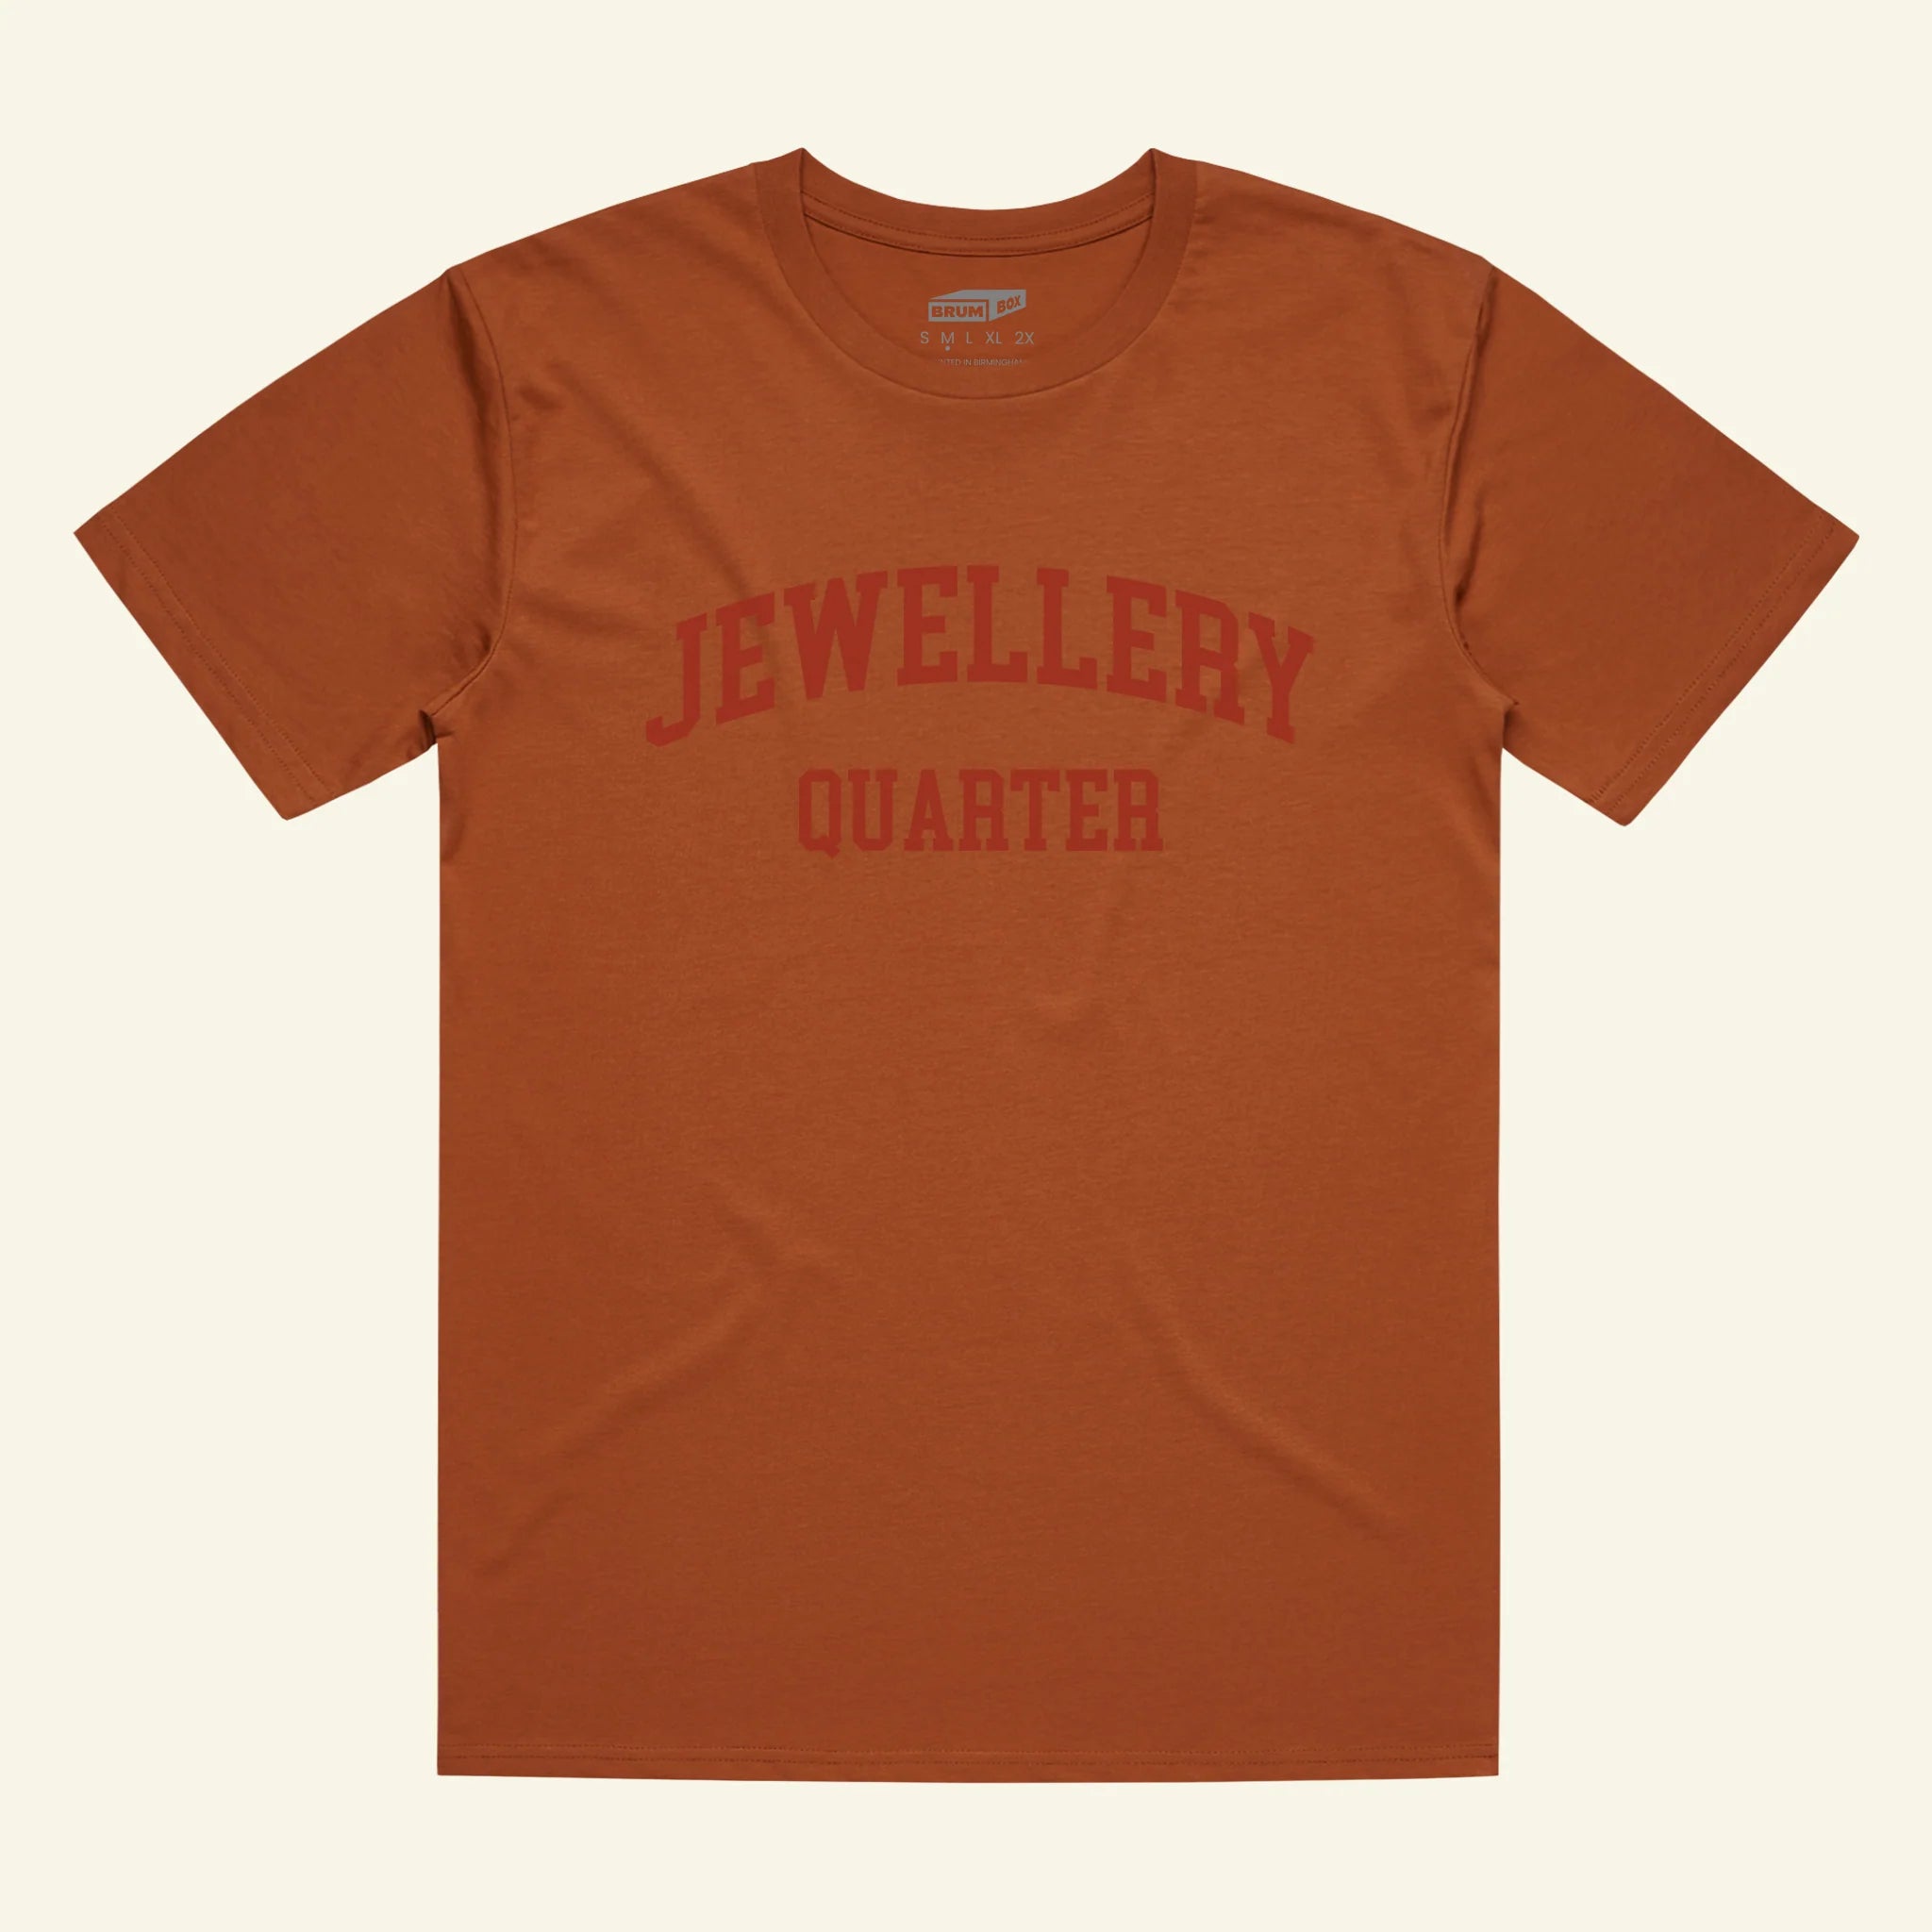 Jewellery Quarter T-Shirt